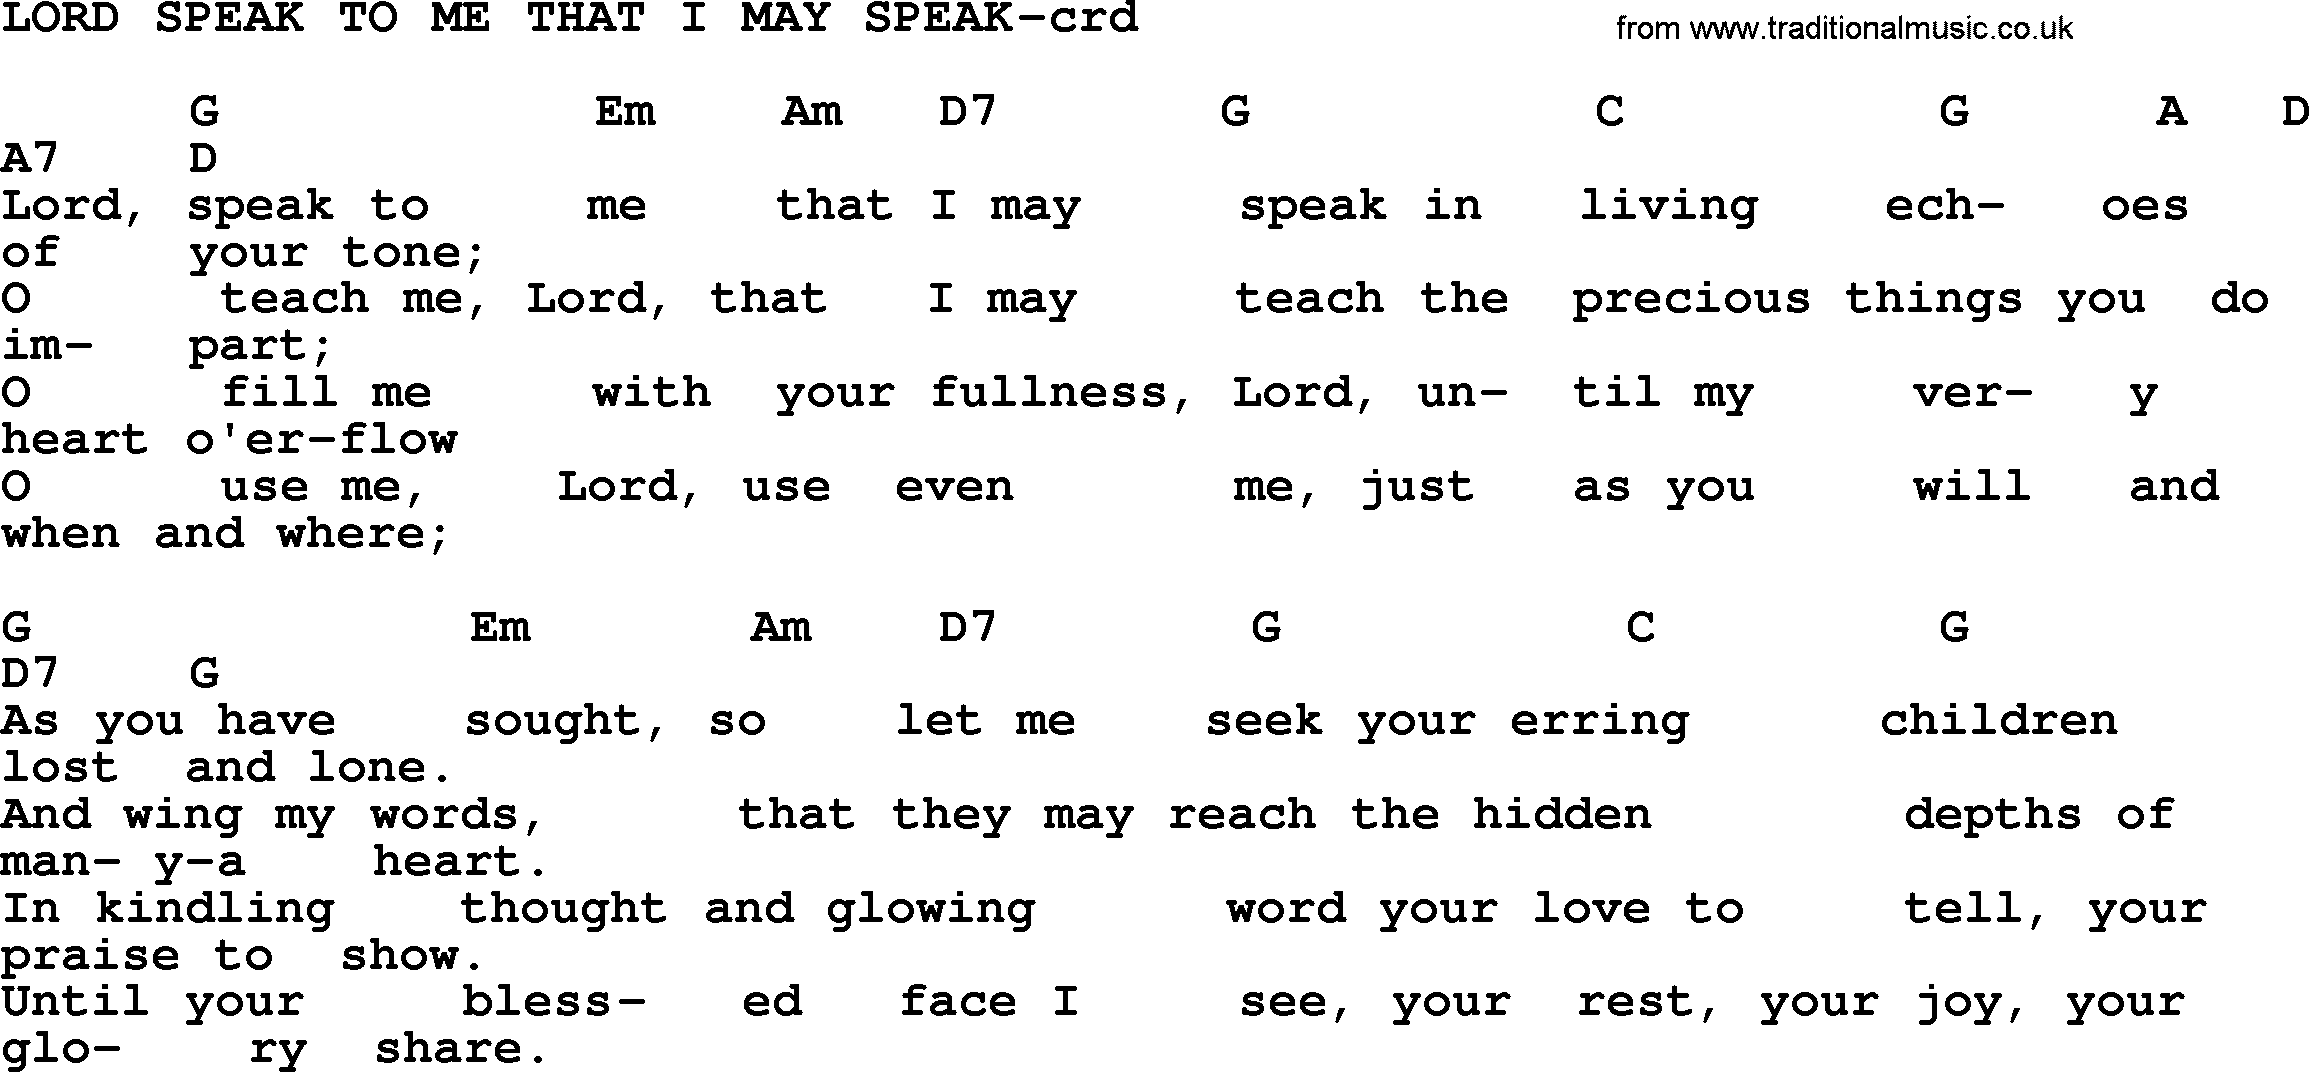 Top 500 Hymn: Lord Speak To Me That I May Speak, lyrics and chords